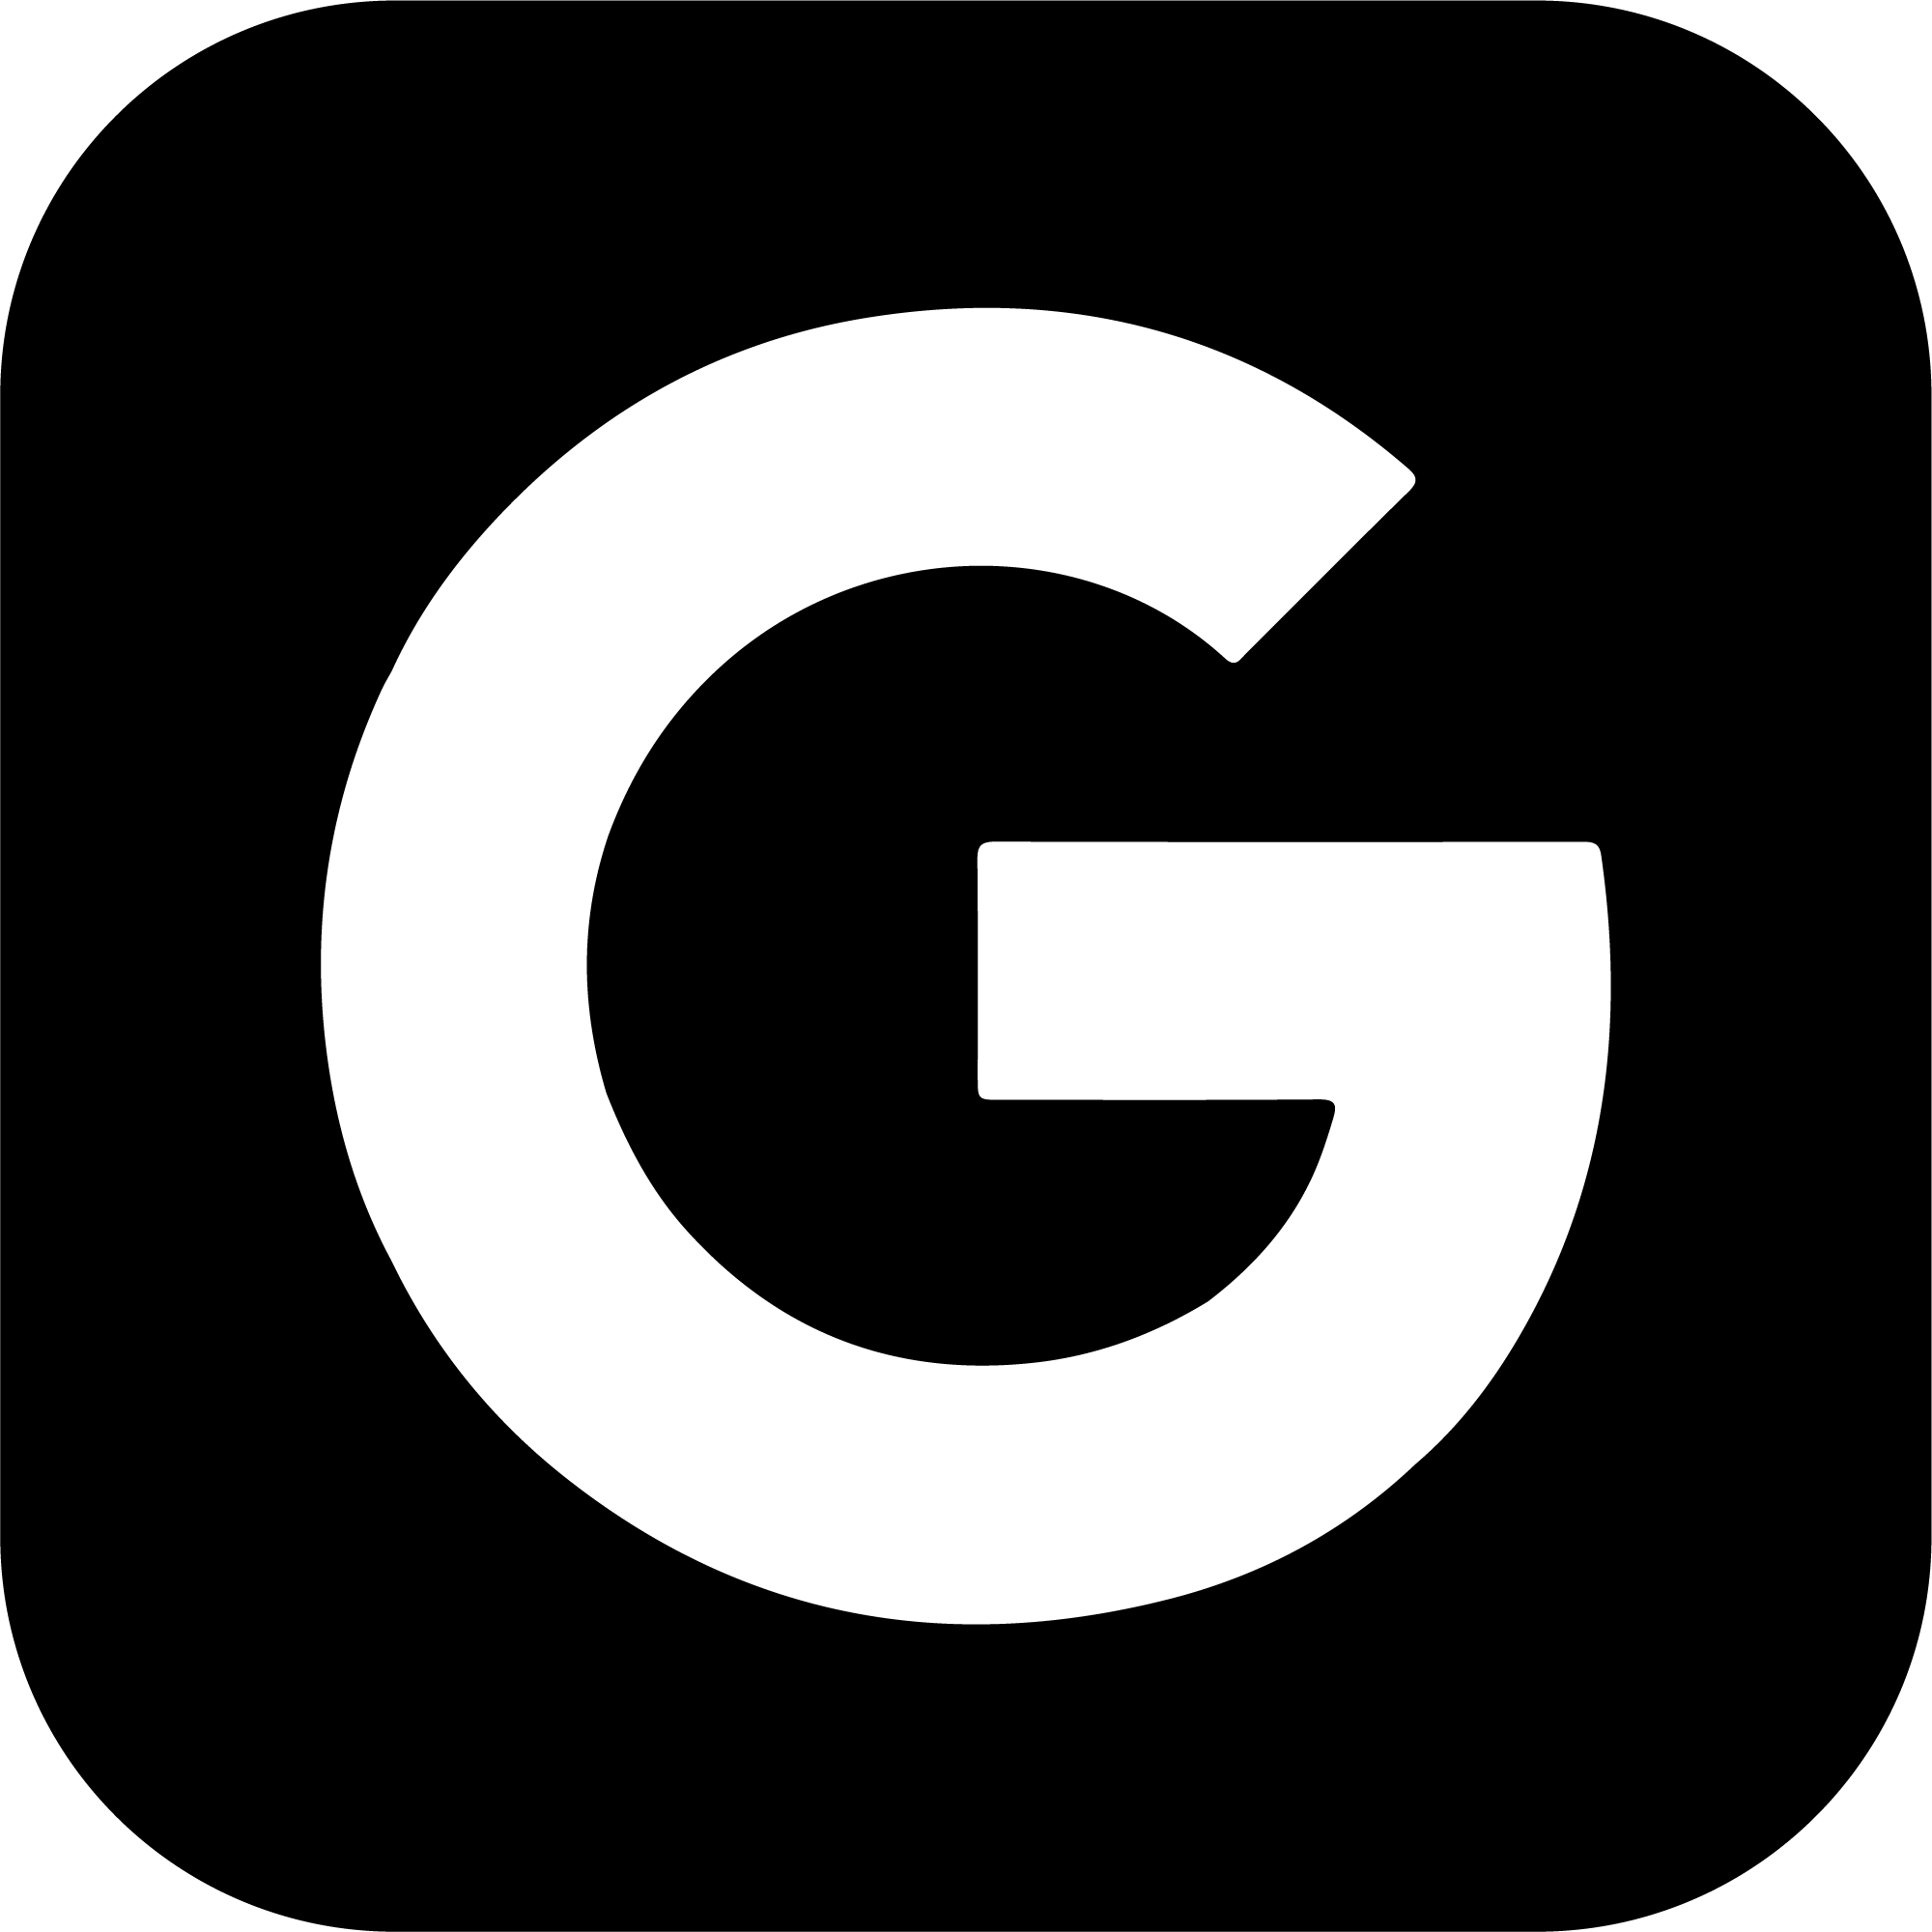 Google Logo Black And White